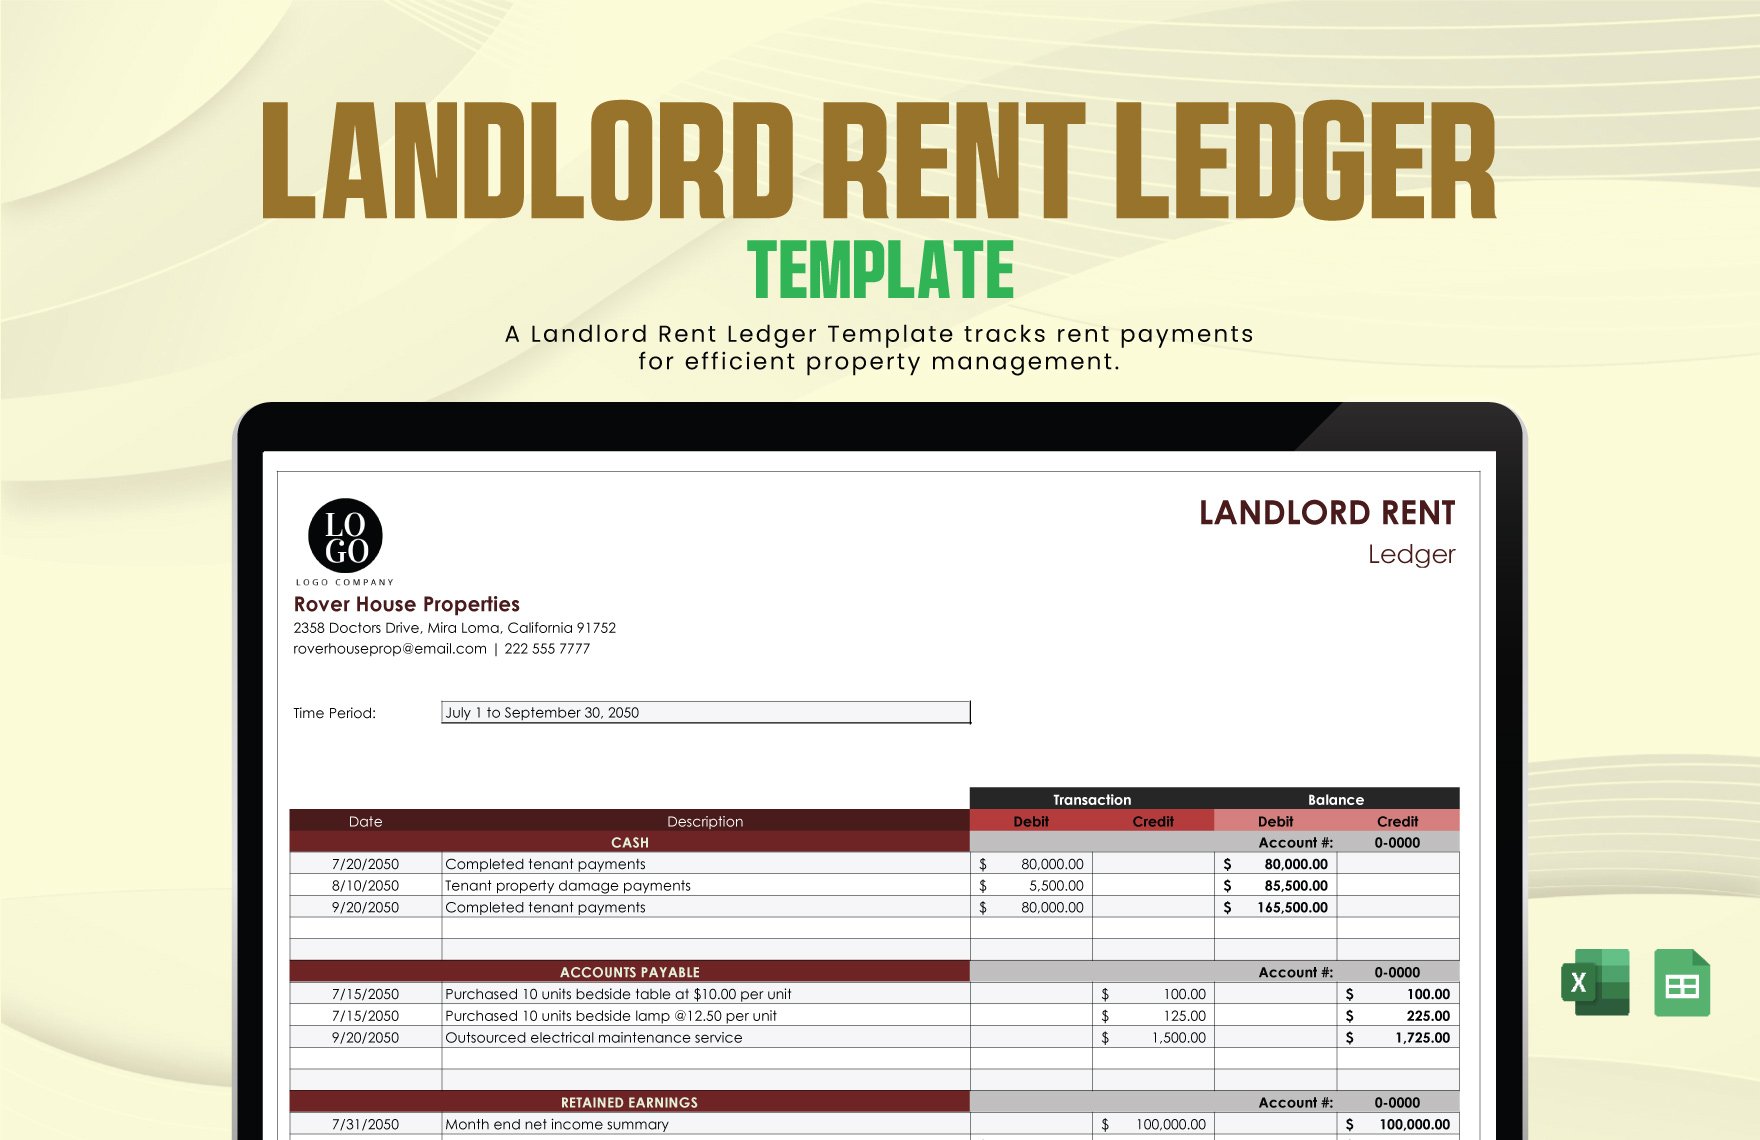 Landlord Rent Ledger Template